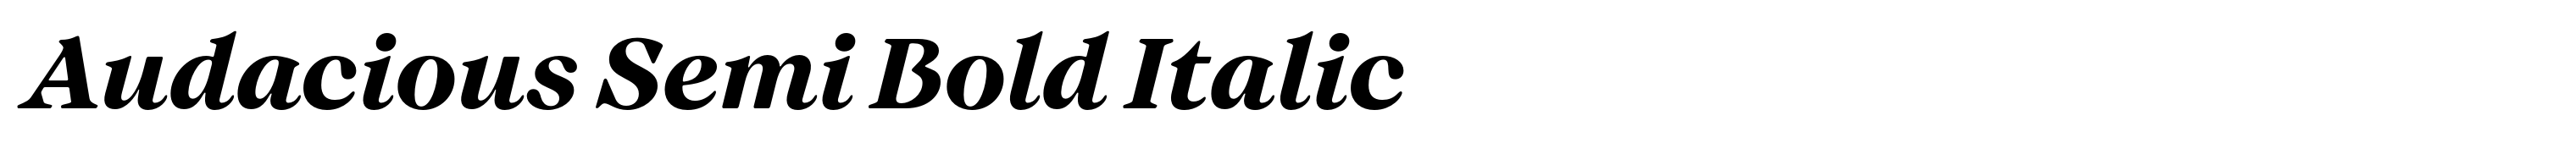 Audacious Semi Bold Italic